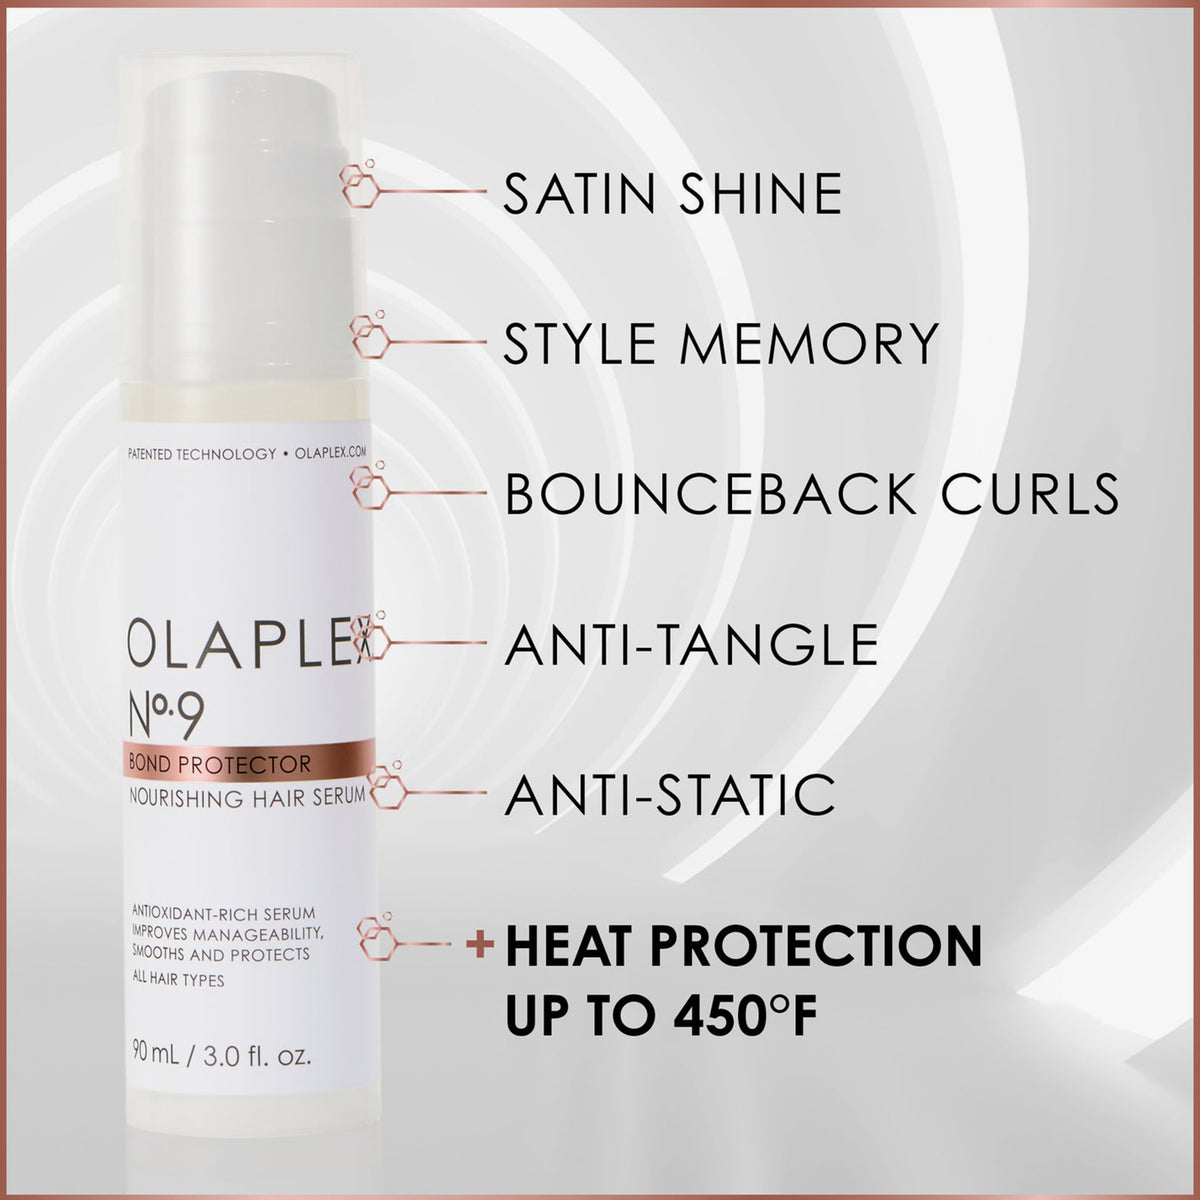 OLAPLEX. | No.9 Bond Protector Nourishing Hair Serum